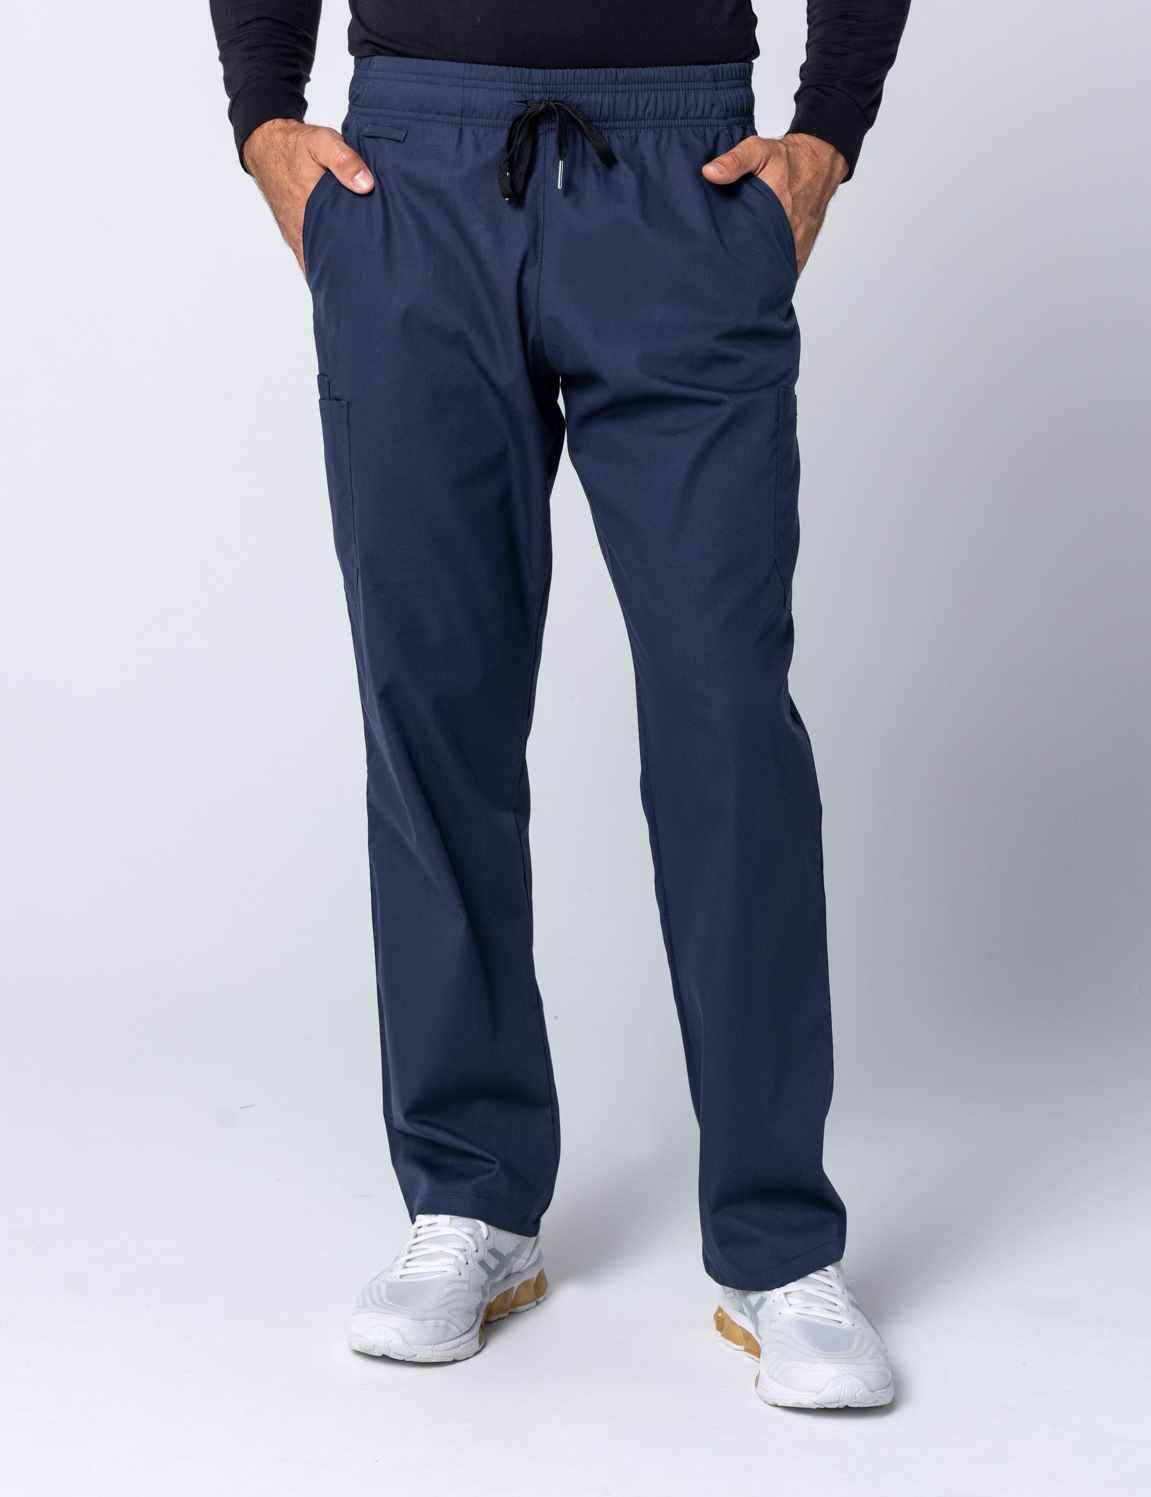 Men's Cargo Performance Pants - Navy - 2X Large